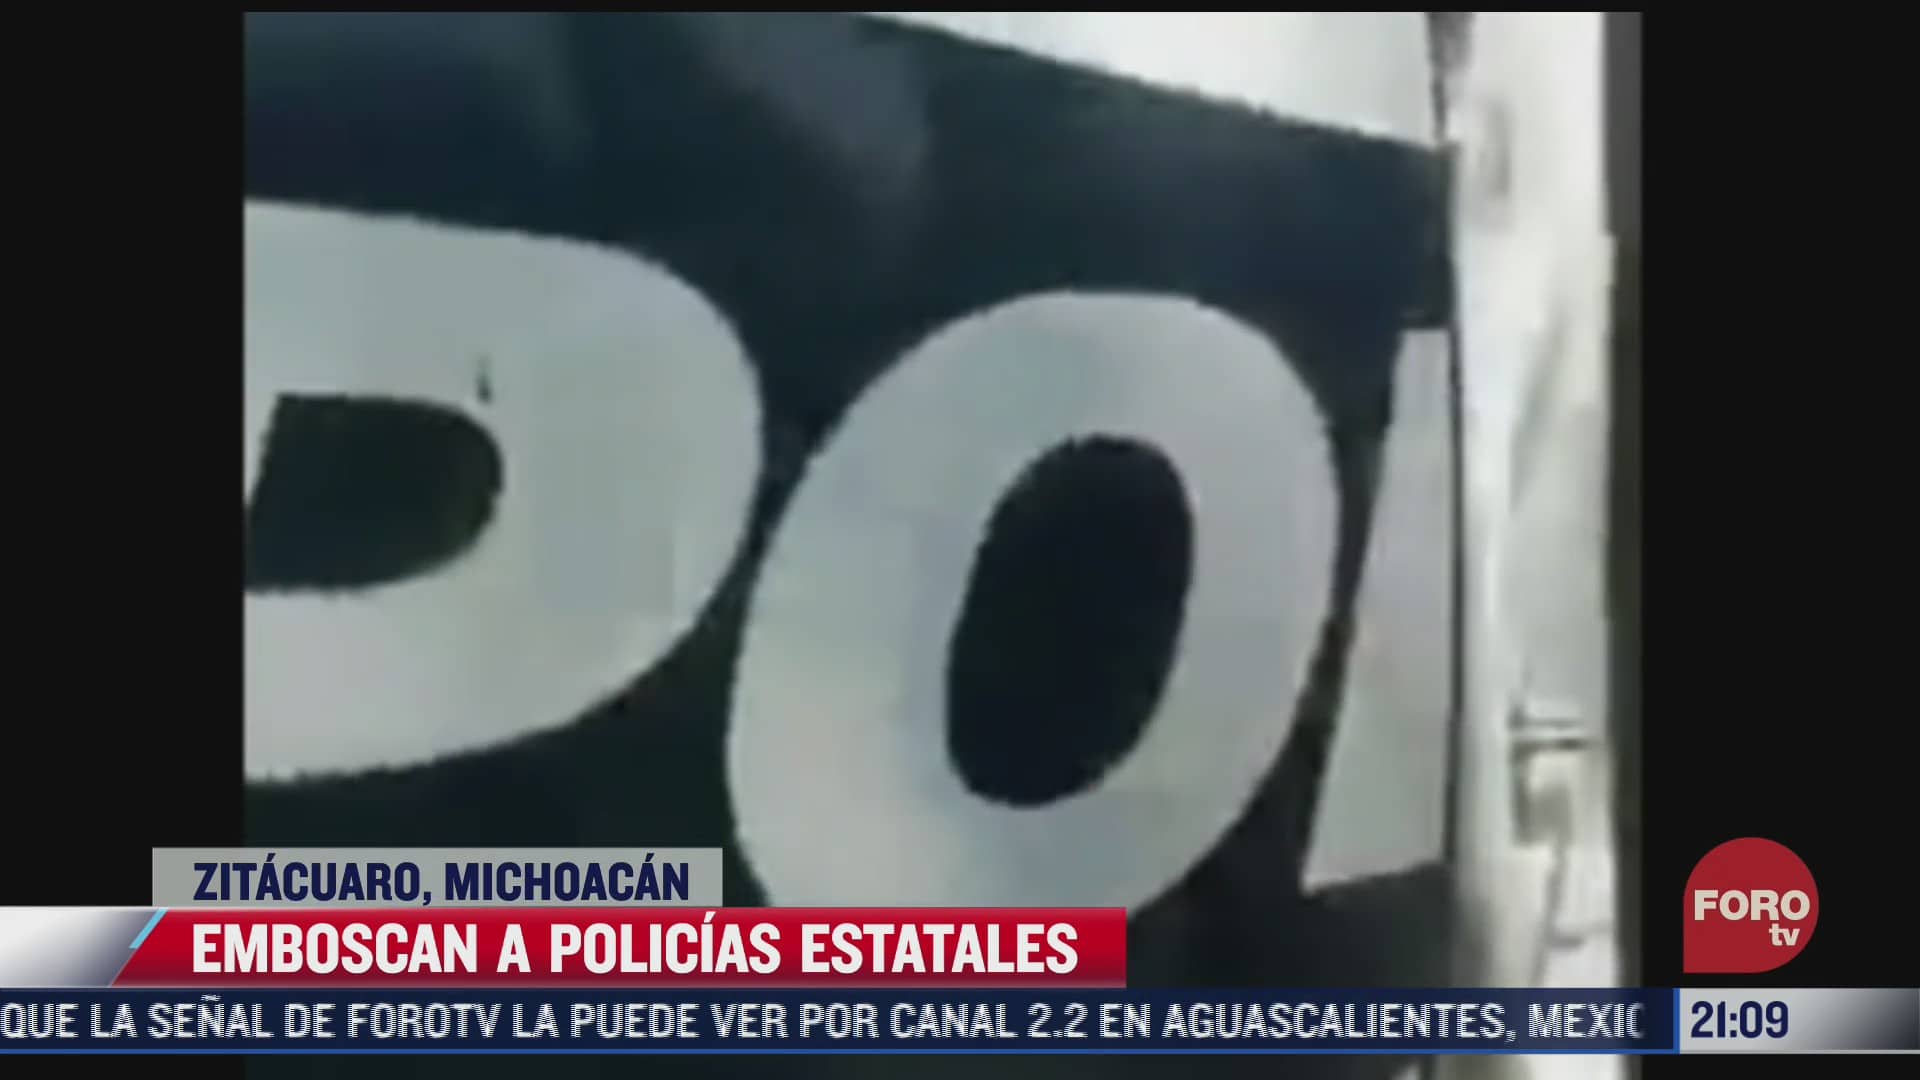 sujetos armados emboscan a policias en zitacuaro michoacan